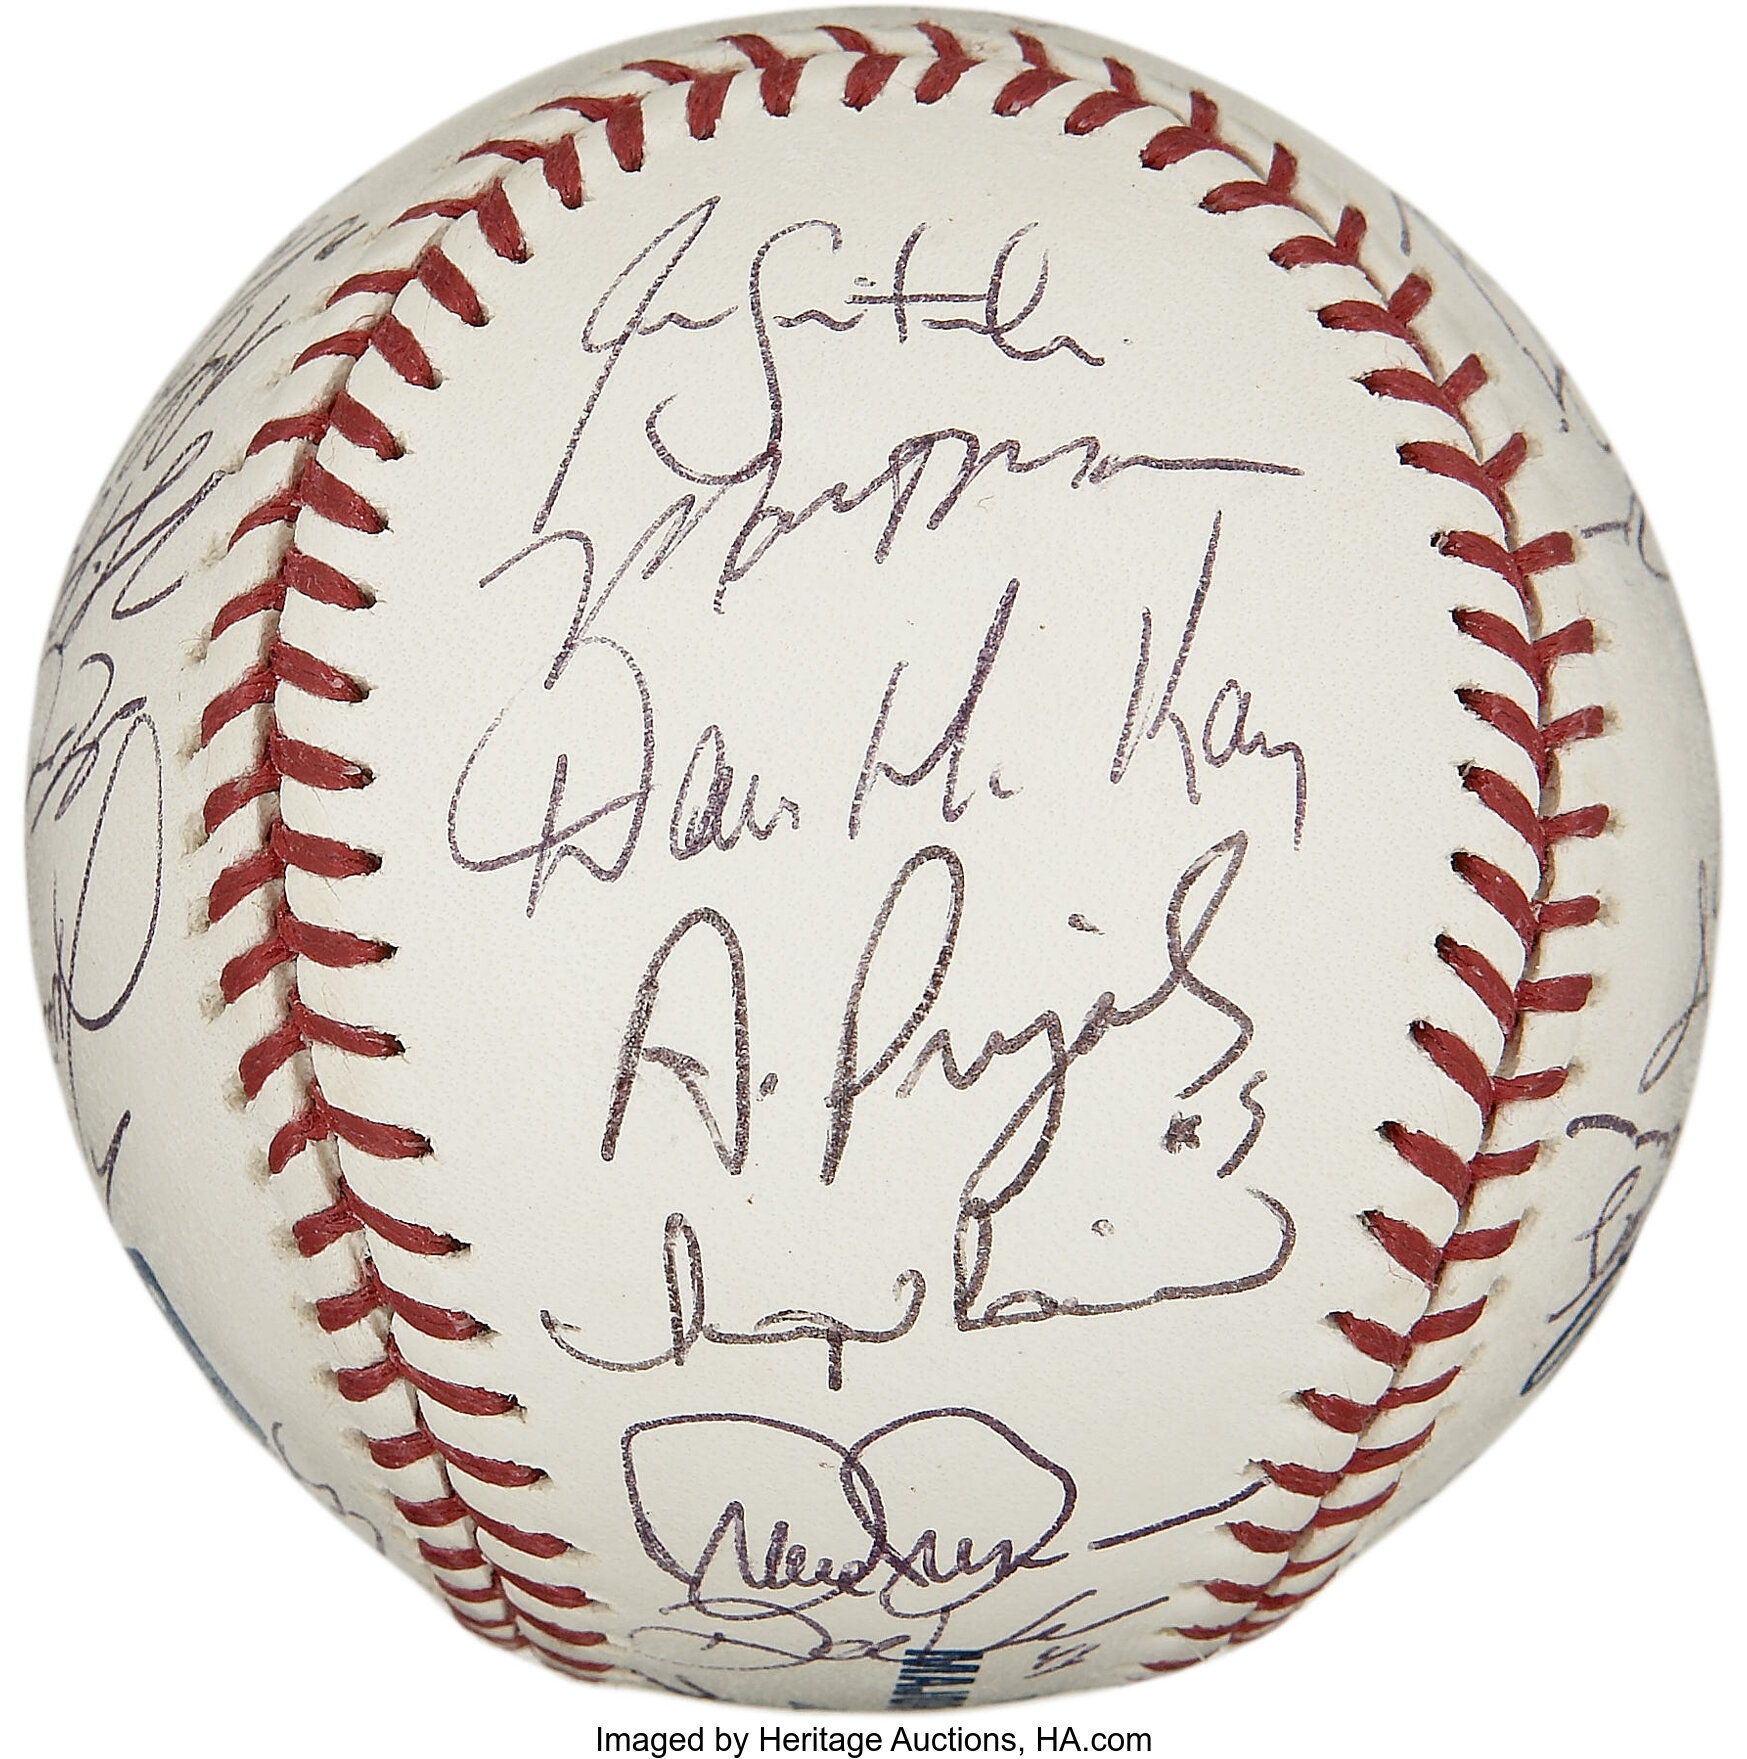 Albert Pujols St. Louis Cardinals Autographed Baseball - Art by